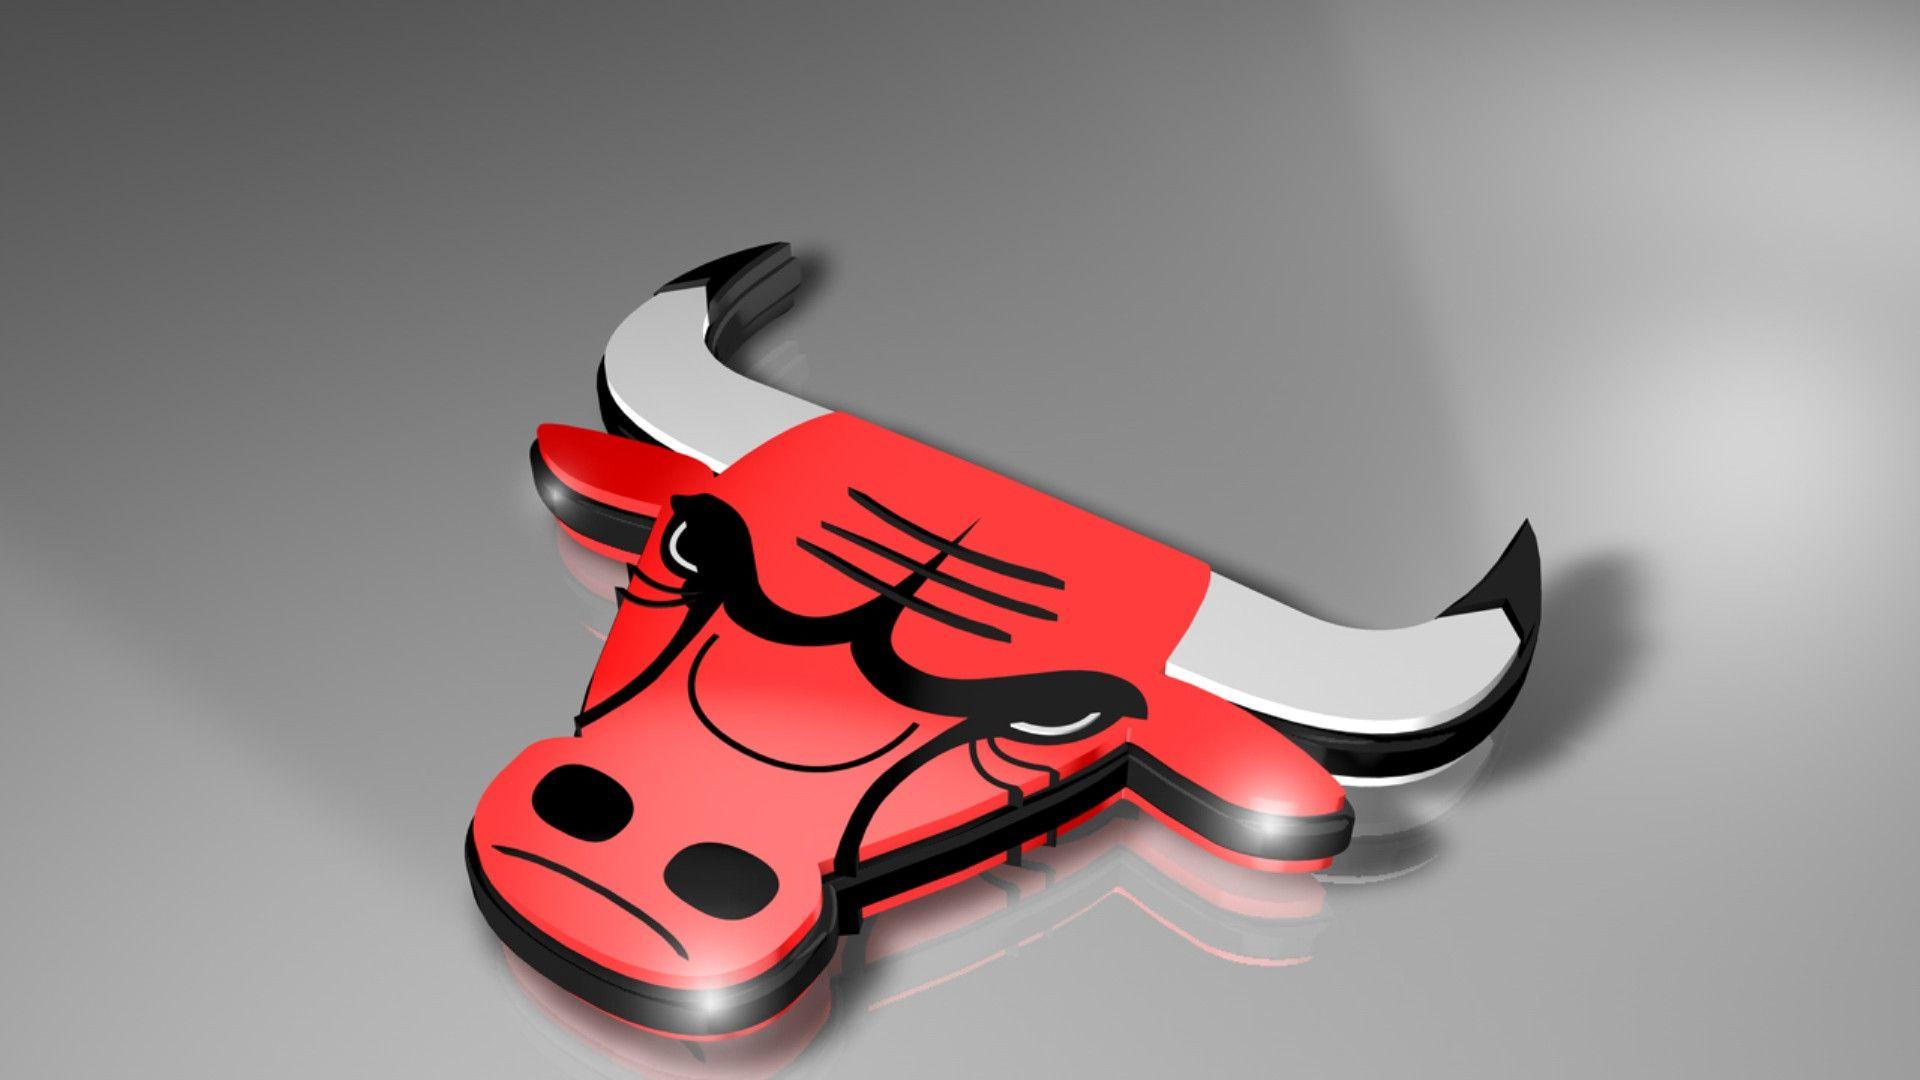 Chicago Bulls 3D Wallpaper